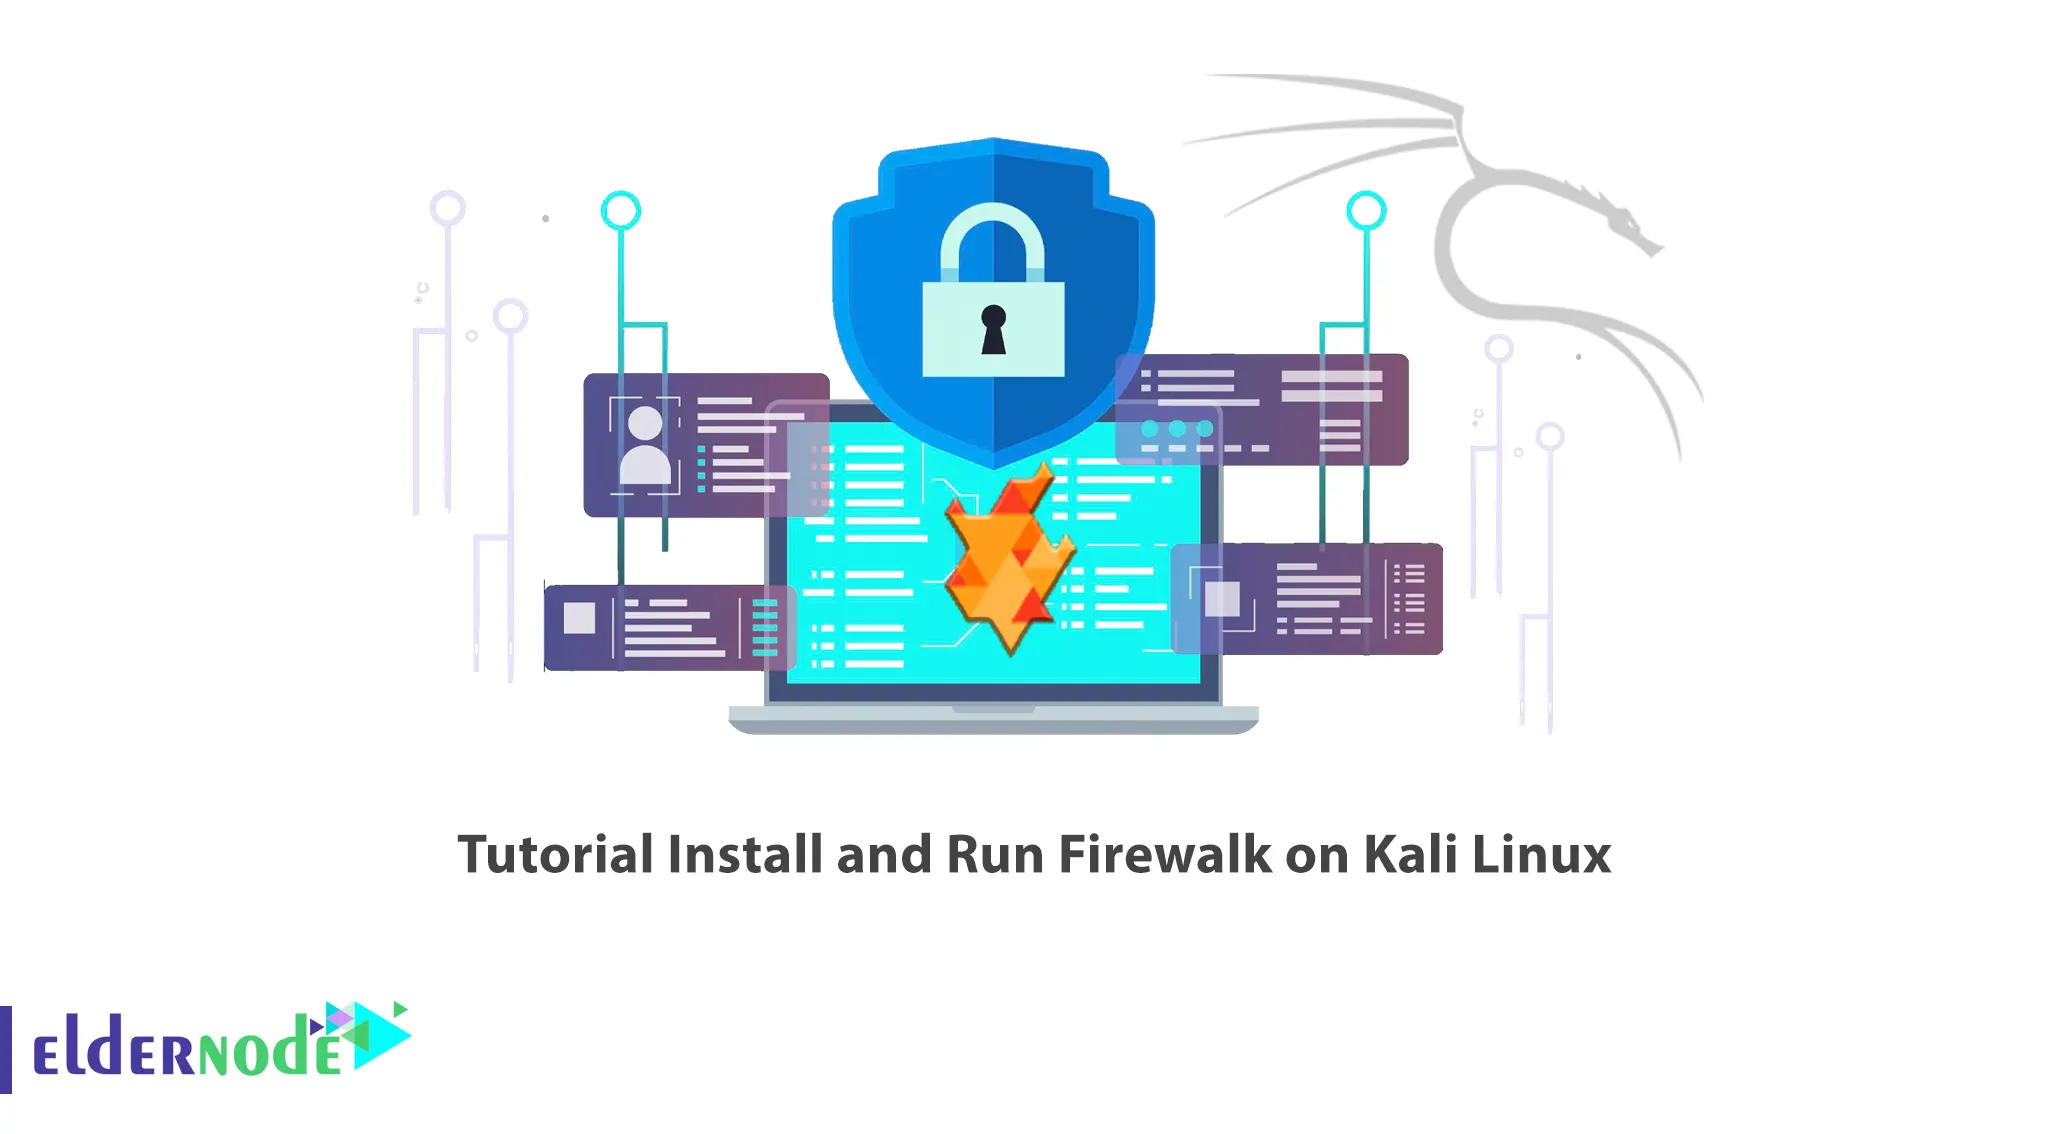 Tutorial Install and Run Firewalk on Kali Linux